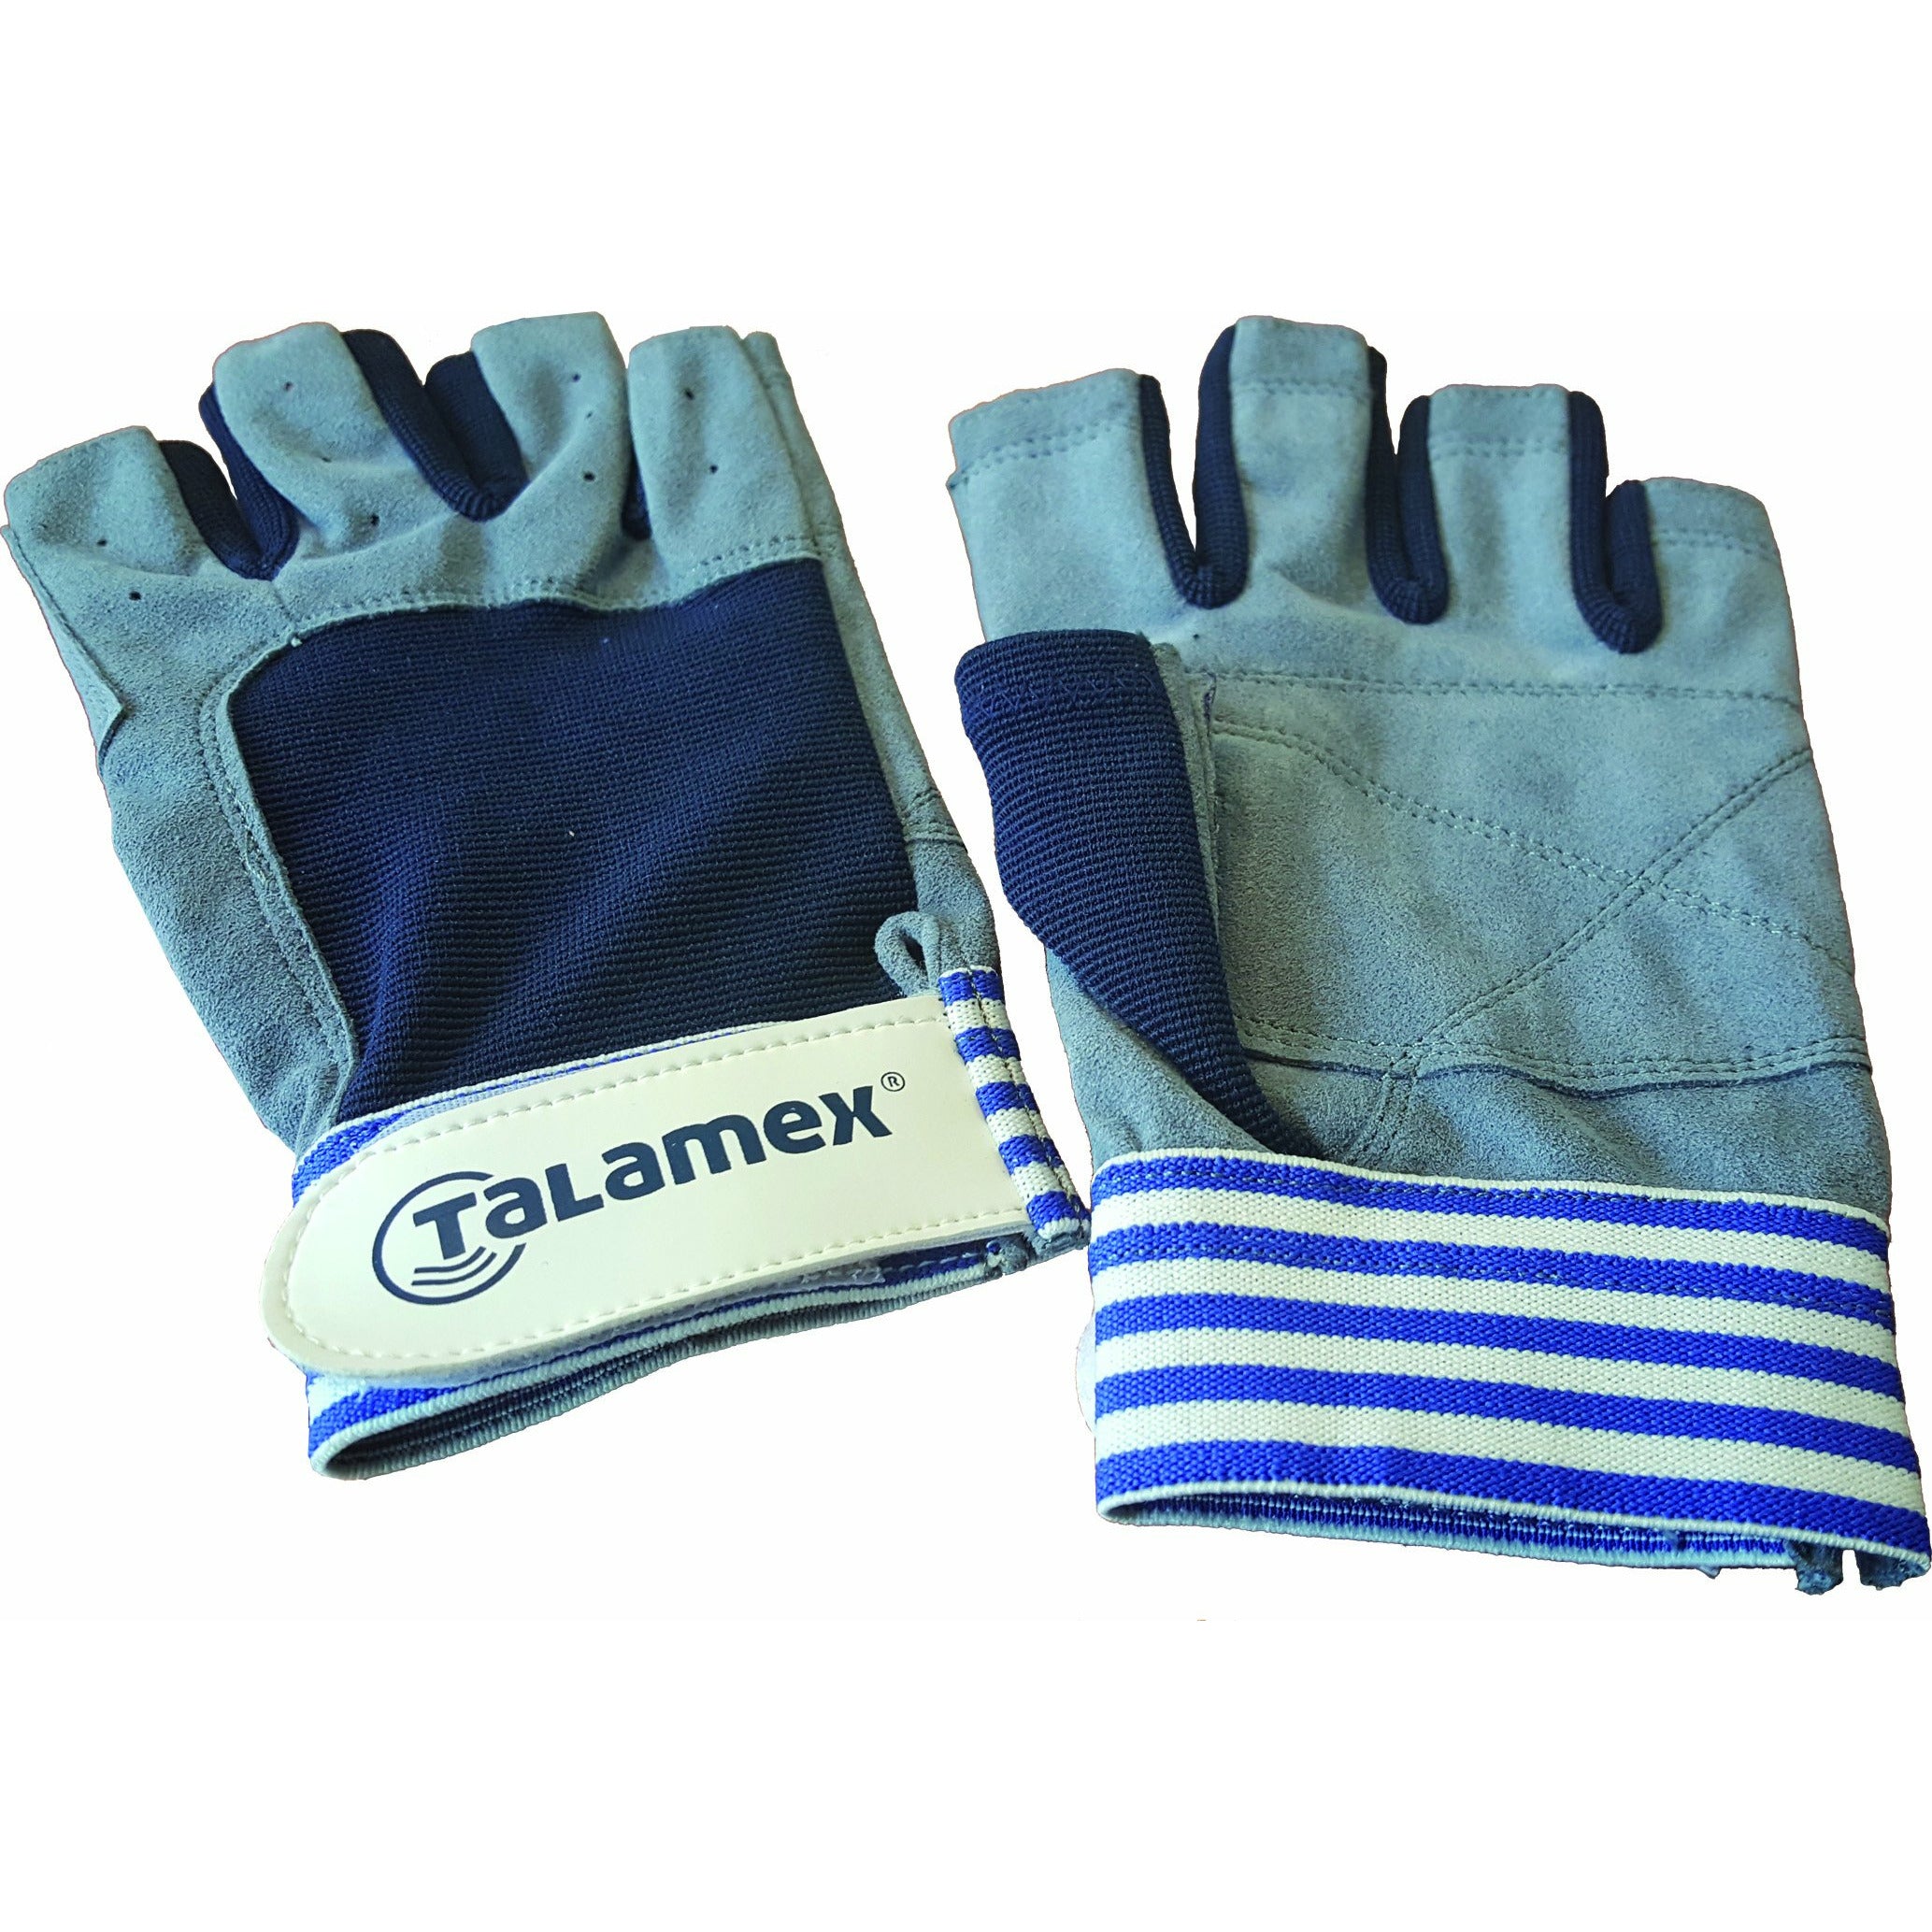 Talamex S'Gloves Amara Small/Open 20805001